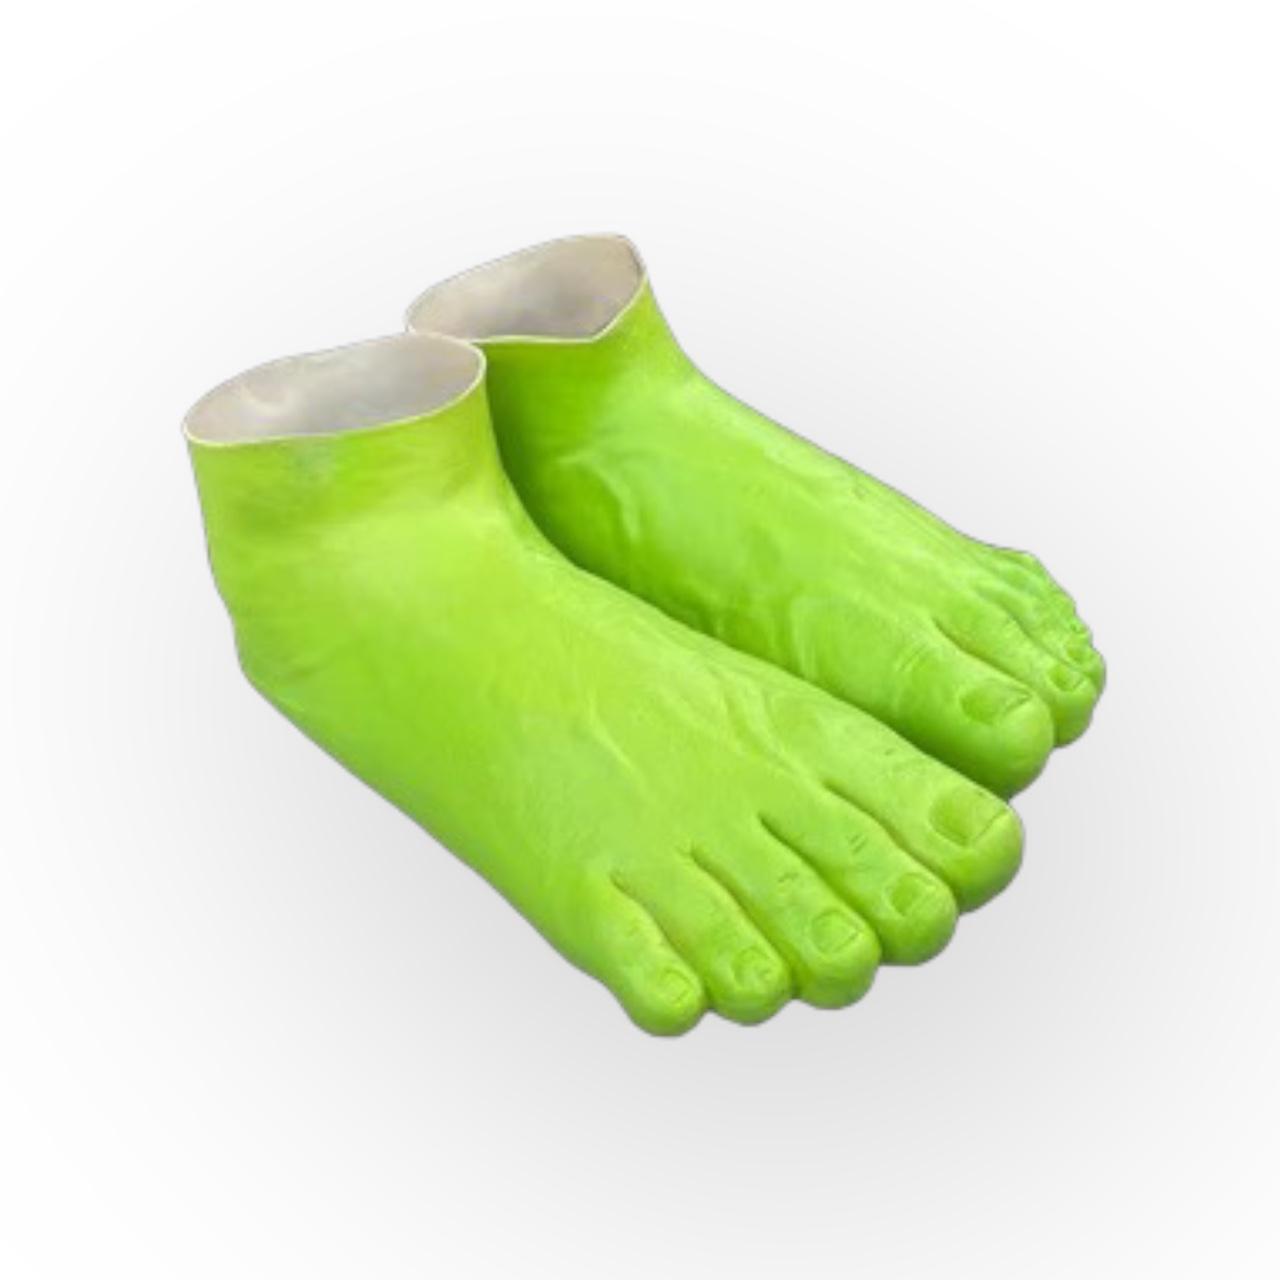 Imran Potato - Caveman Foot Slippers 'Hulk' (Green) – eluXive